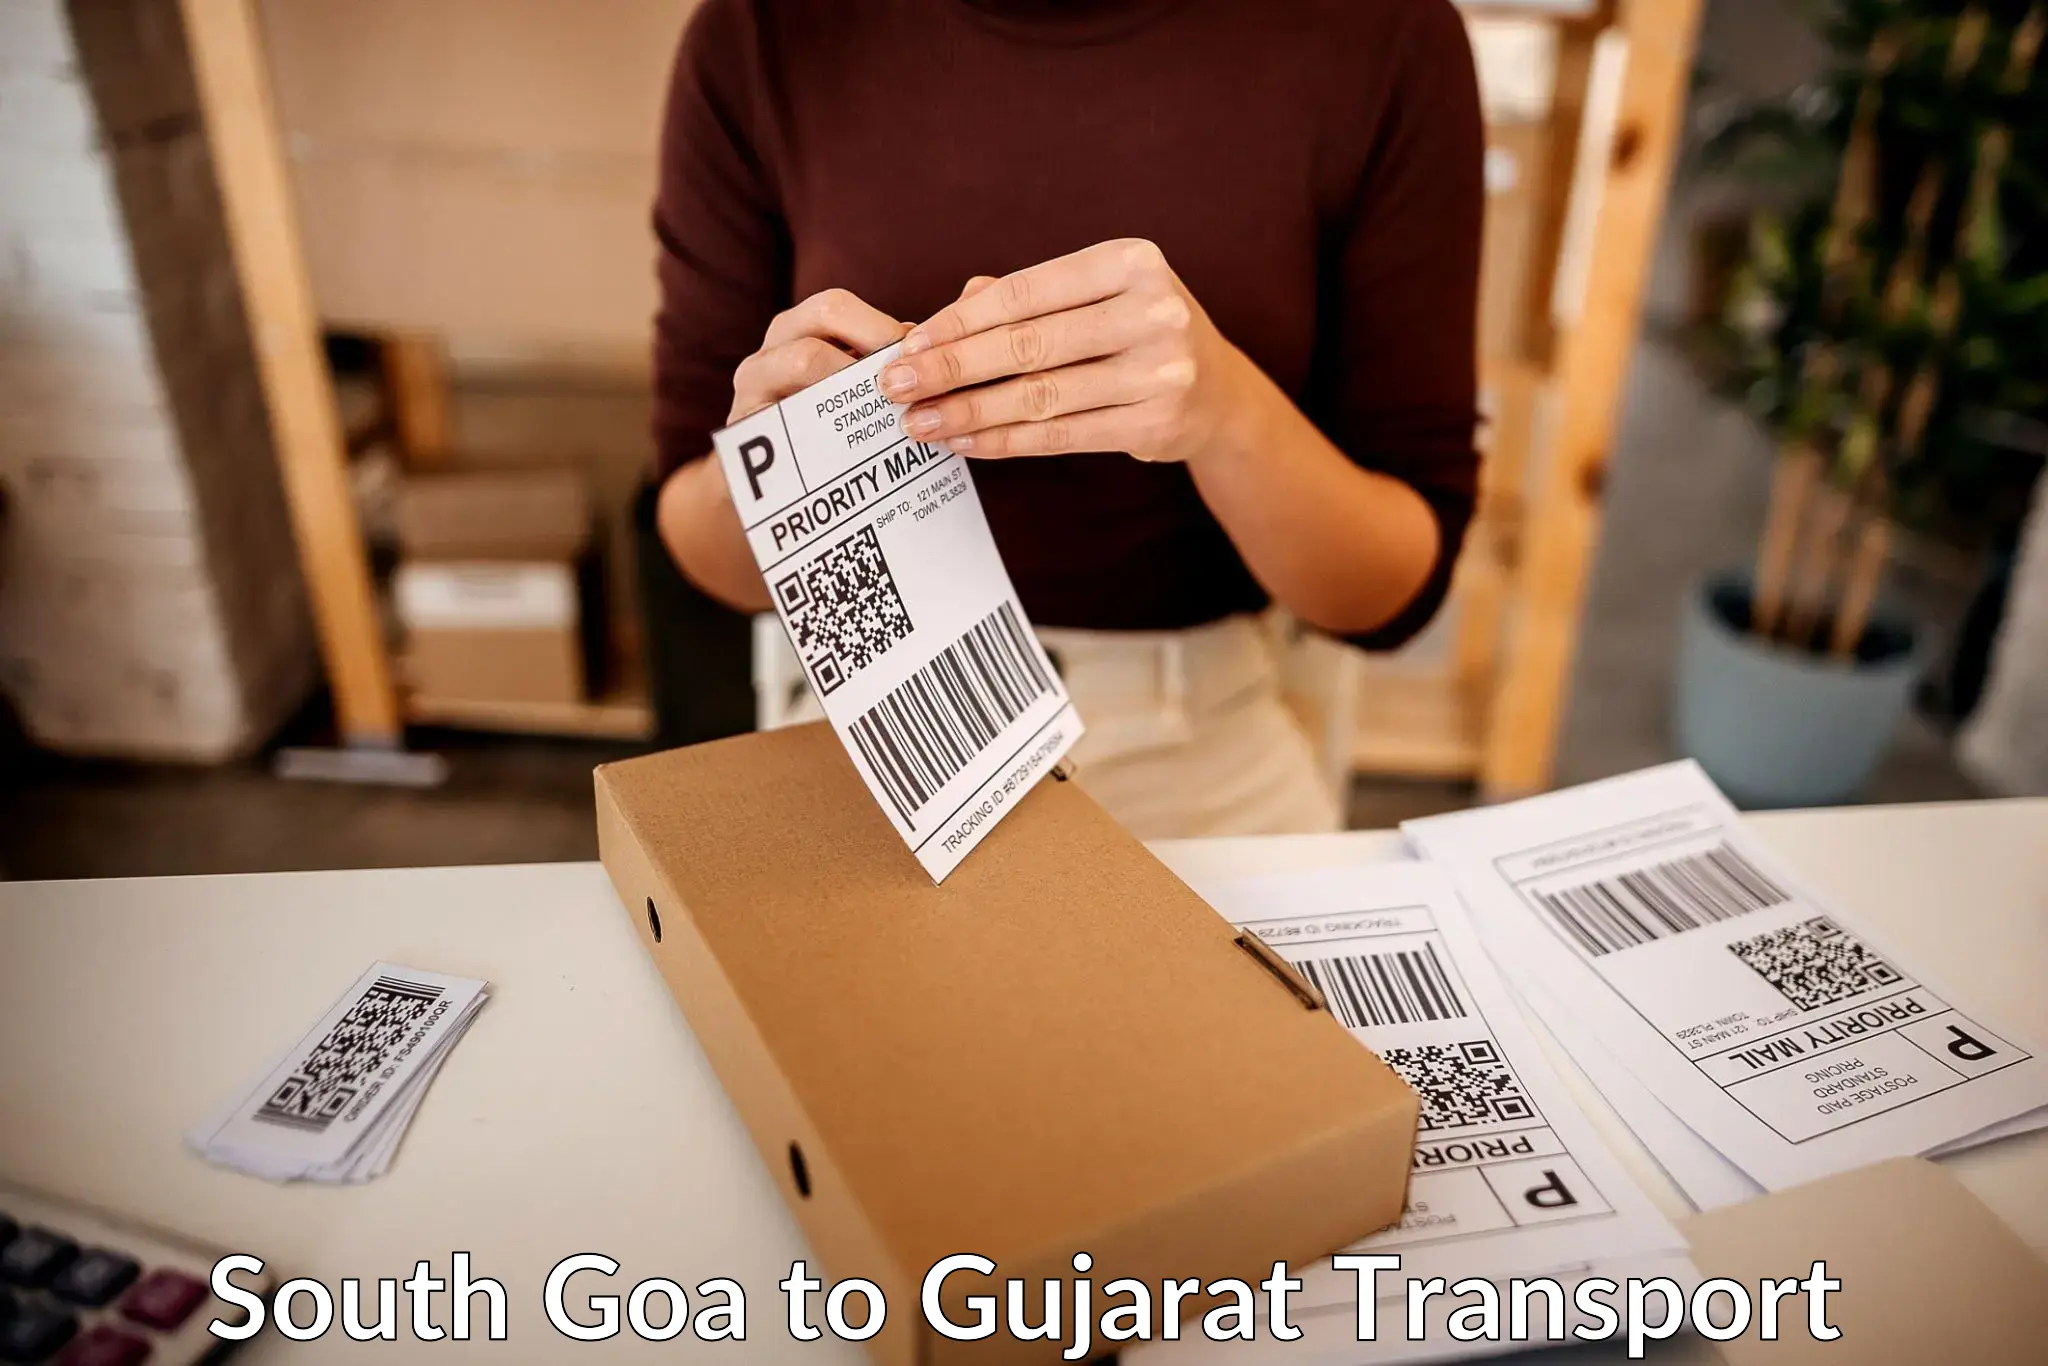 Transport services South Goa to IIT Gandhi Nagar